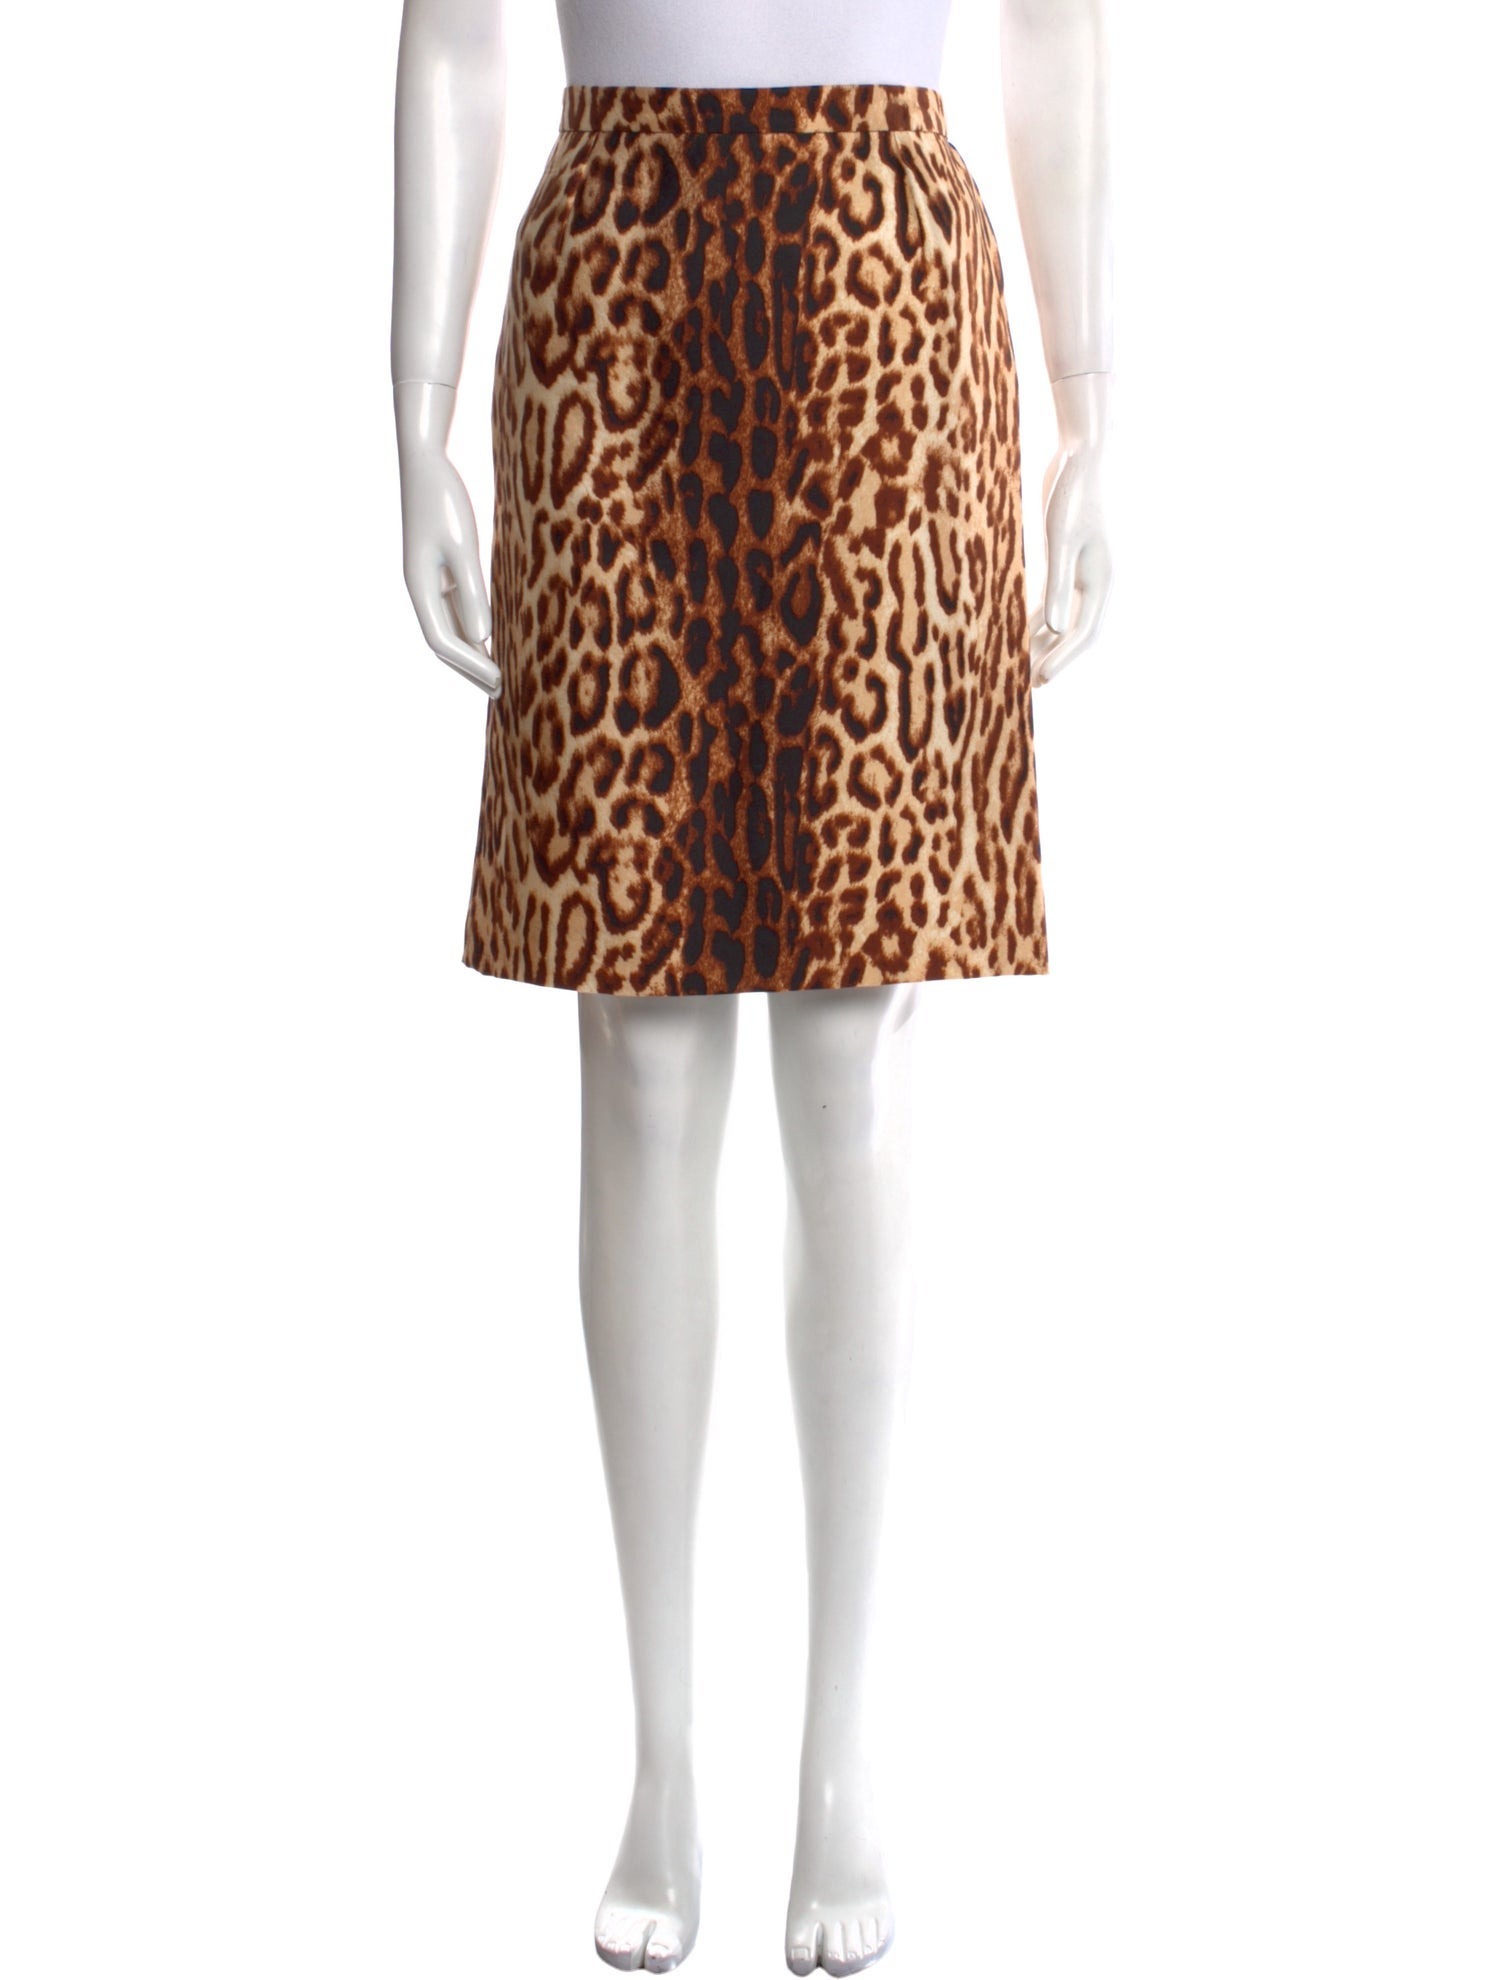 Leopard print vintage Celine pencil skirt